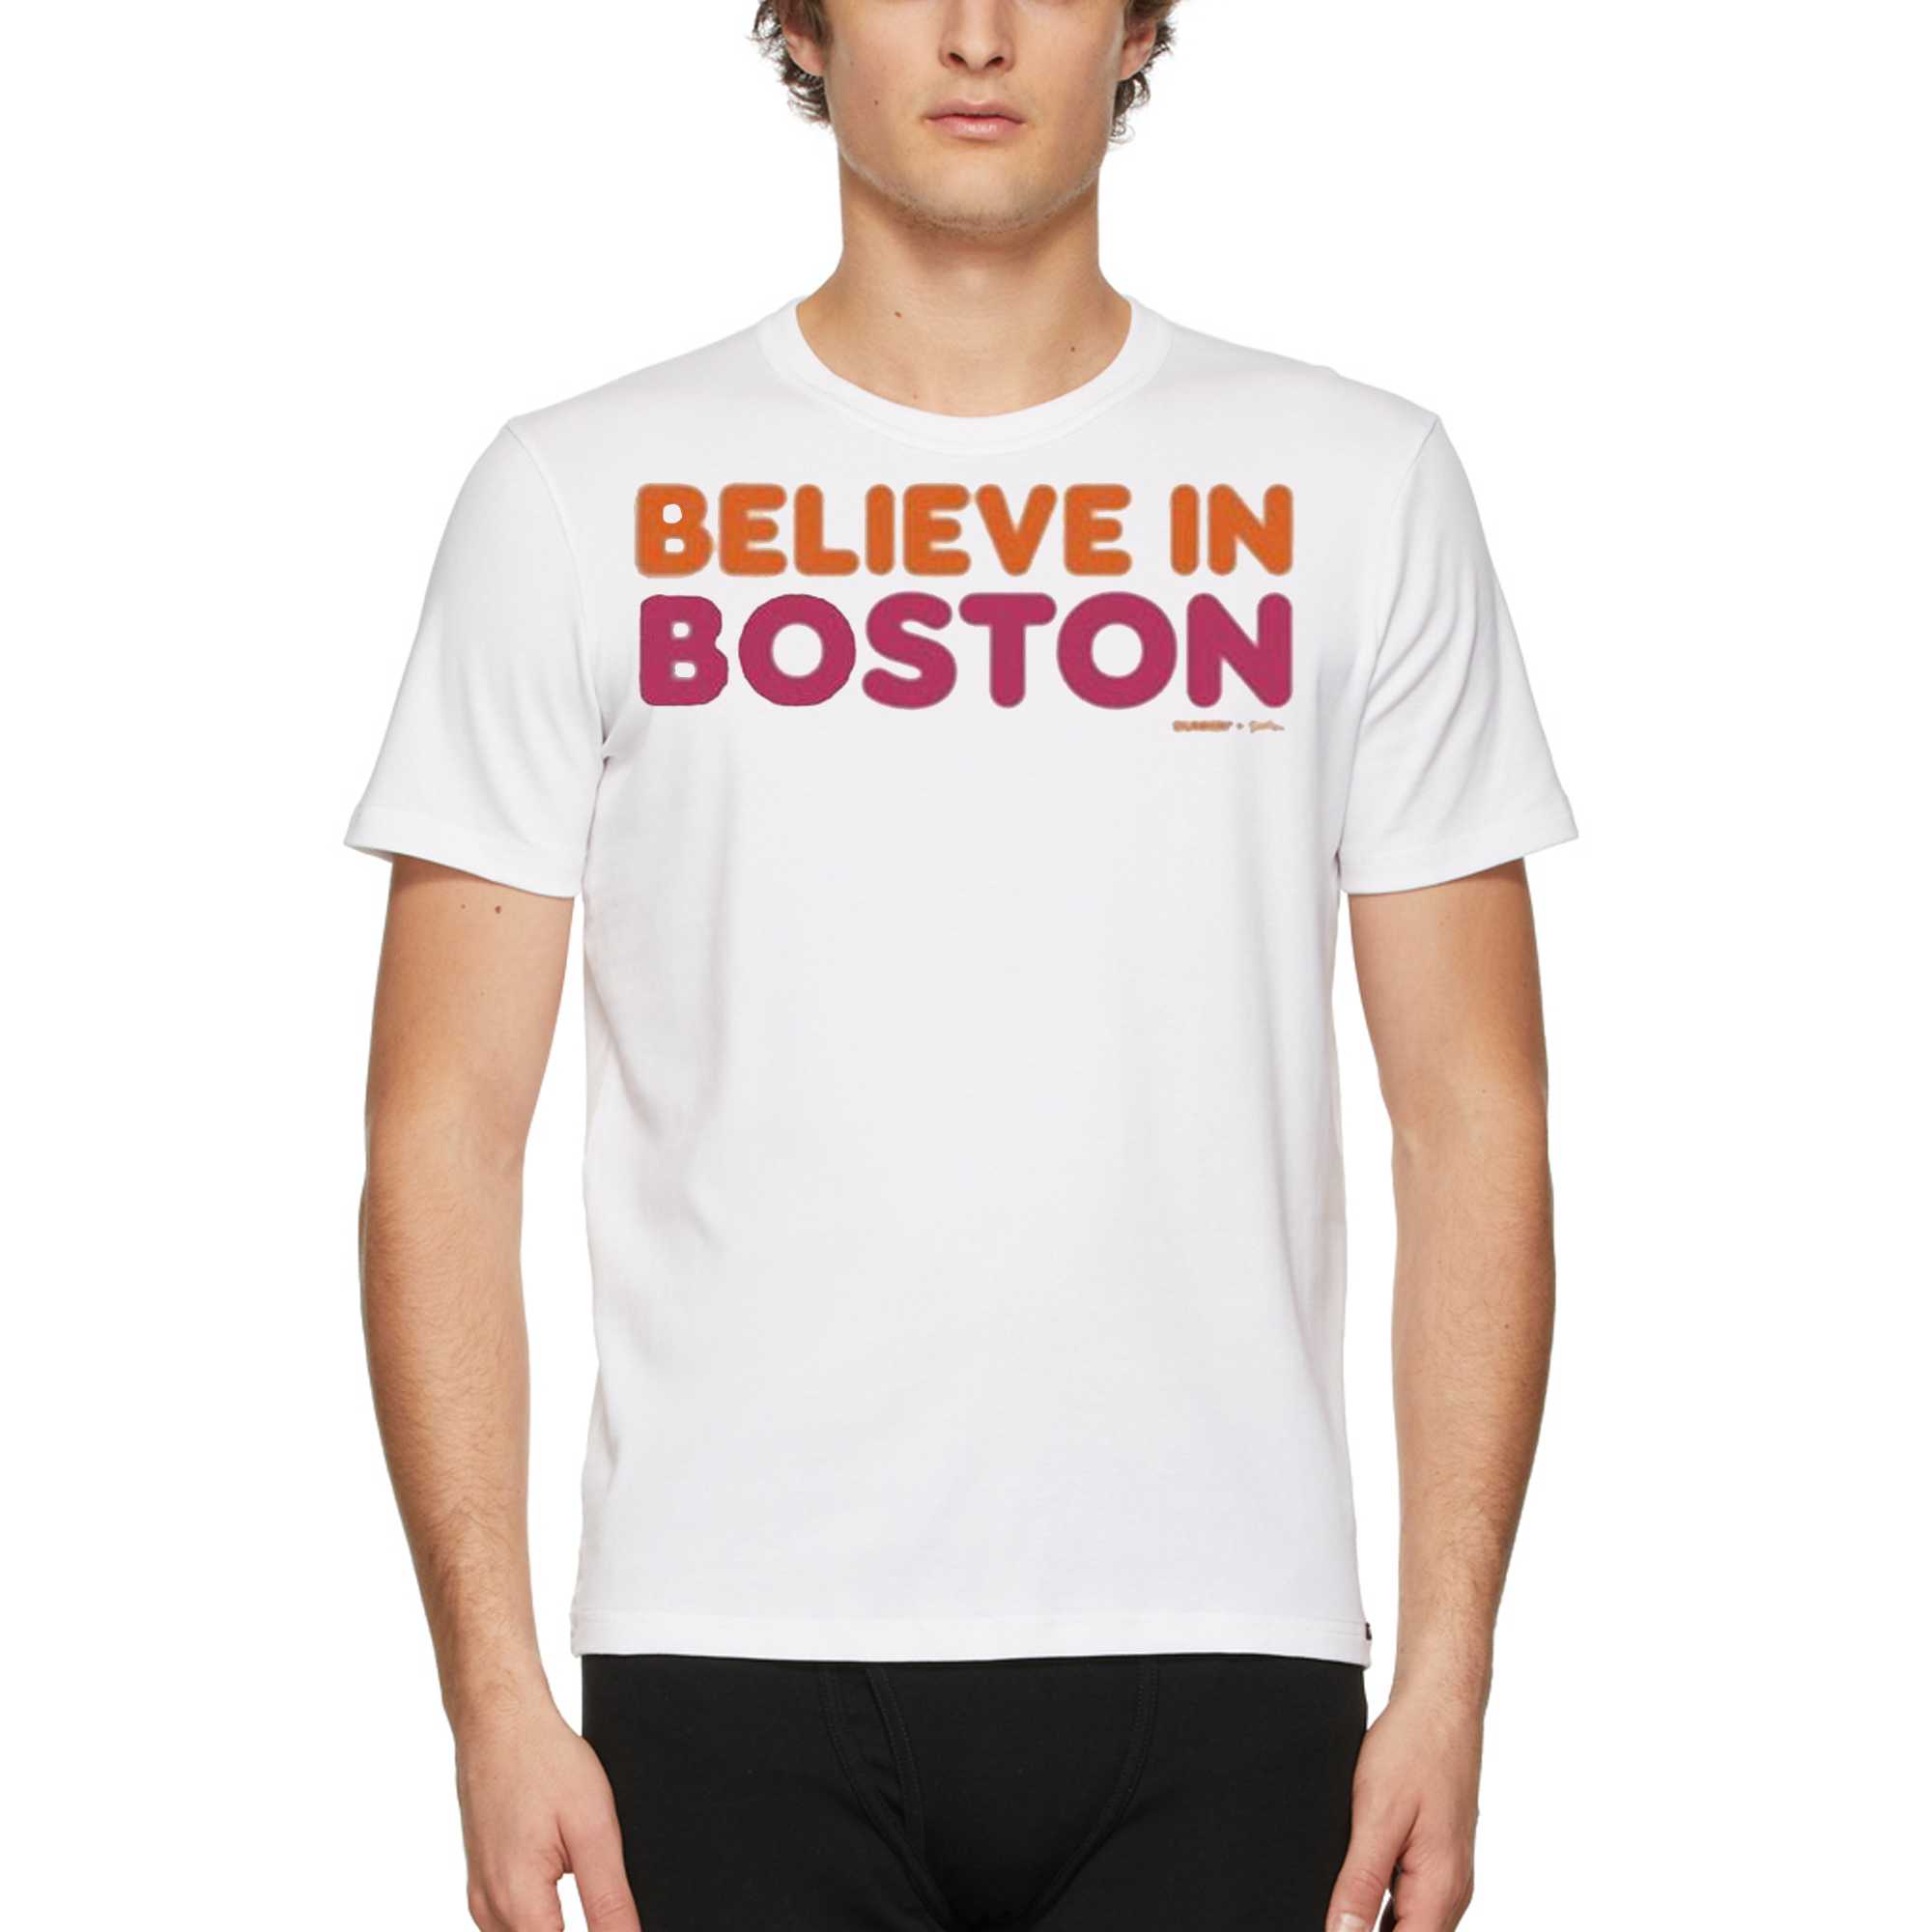 Pedro Martinez Boston Red Sox Baseball Retro Shirt